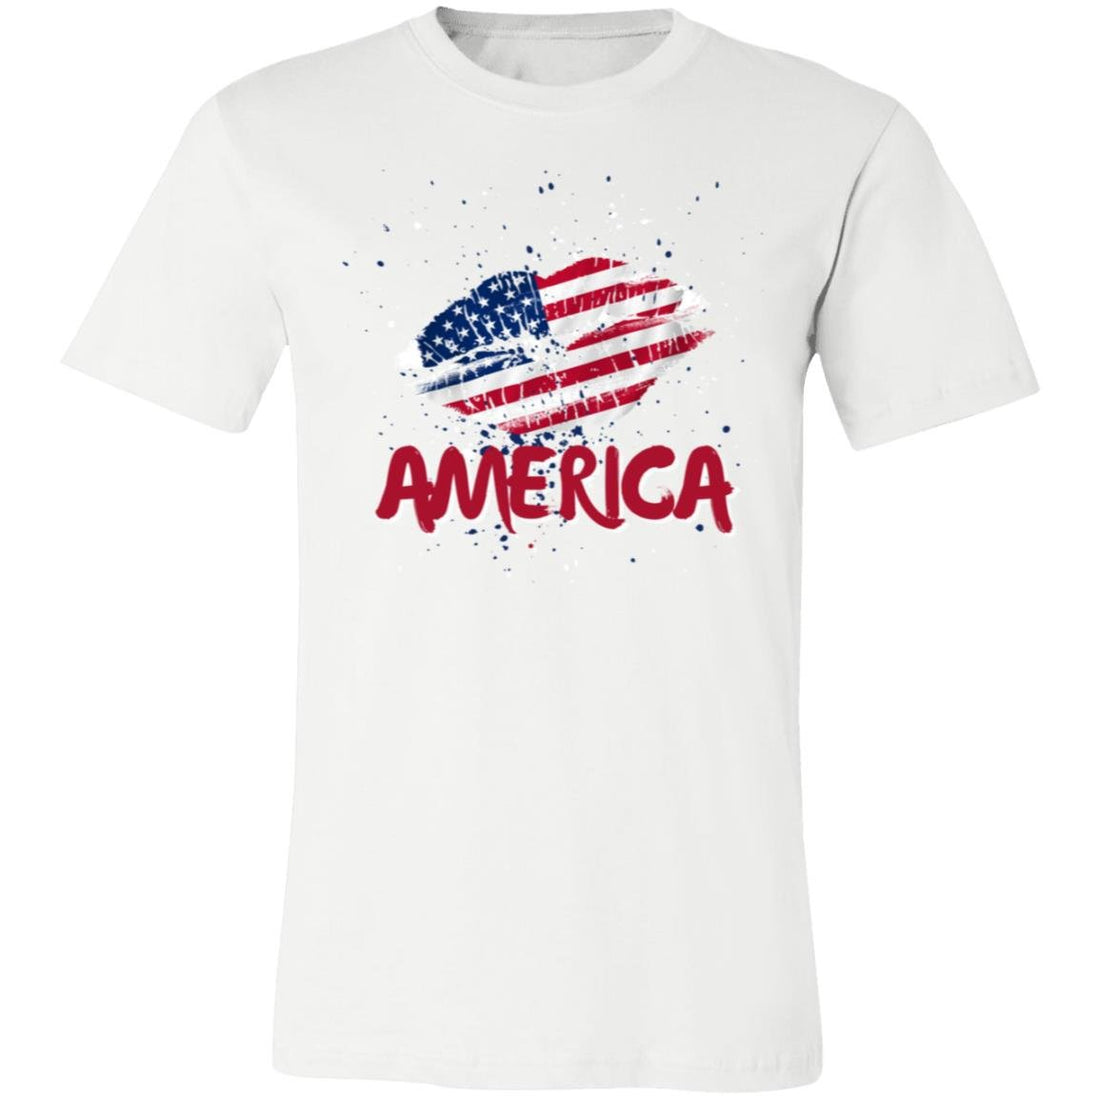 America Lips T-Shirt - T-Shirts - Positively Sassy - America Lips T-Shirt